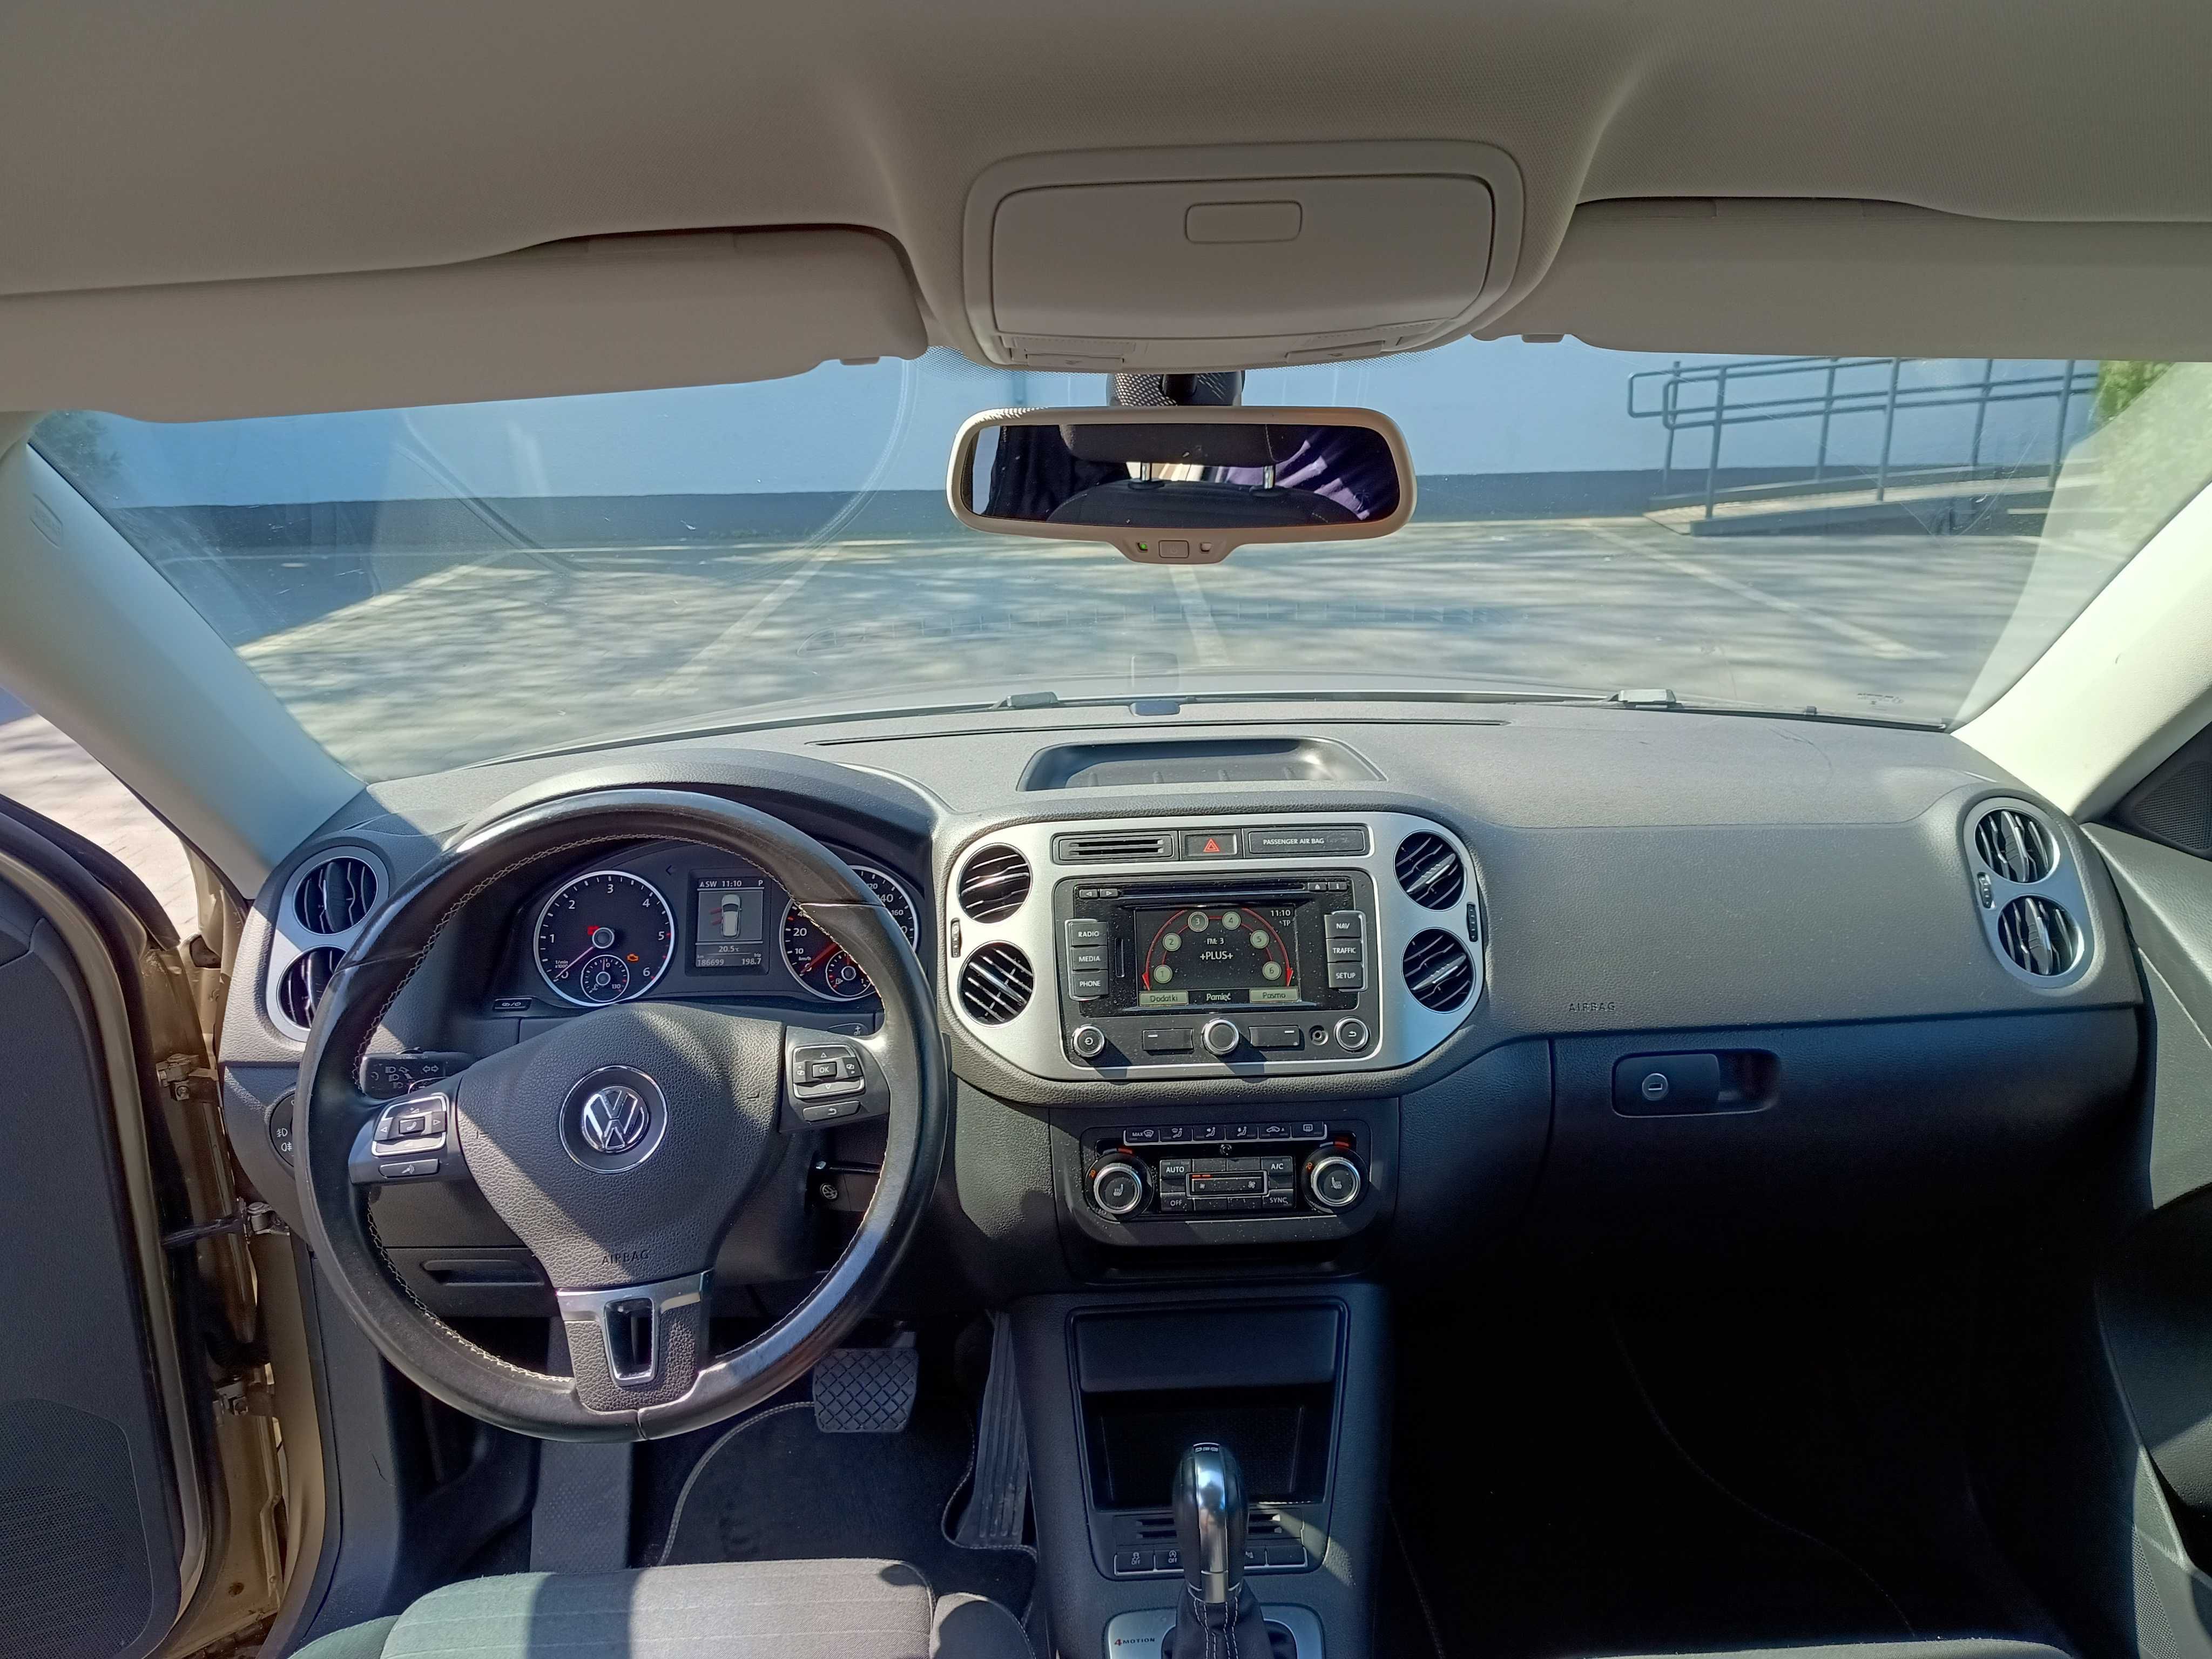 VW Tiguan 2.0 TDI DSG 4 Motion 2014 rok 187 tyś km